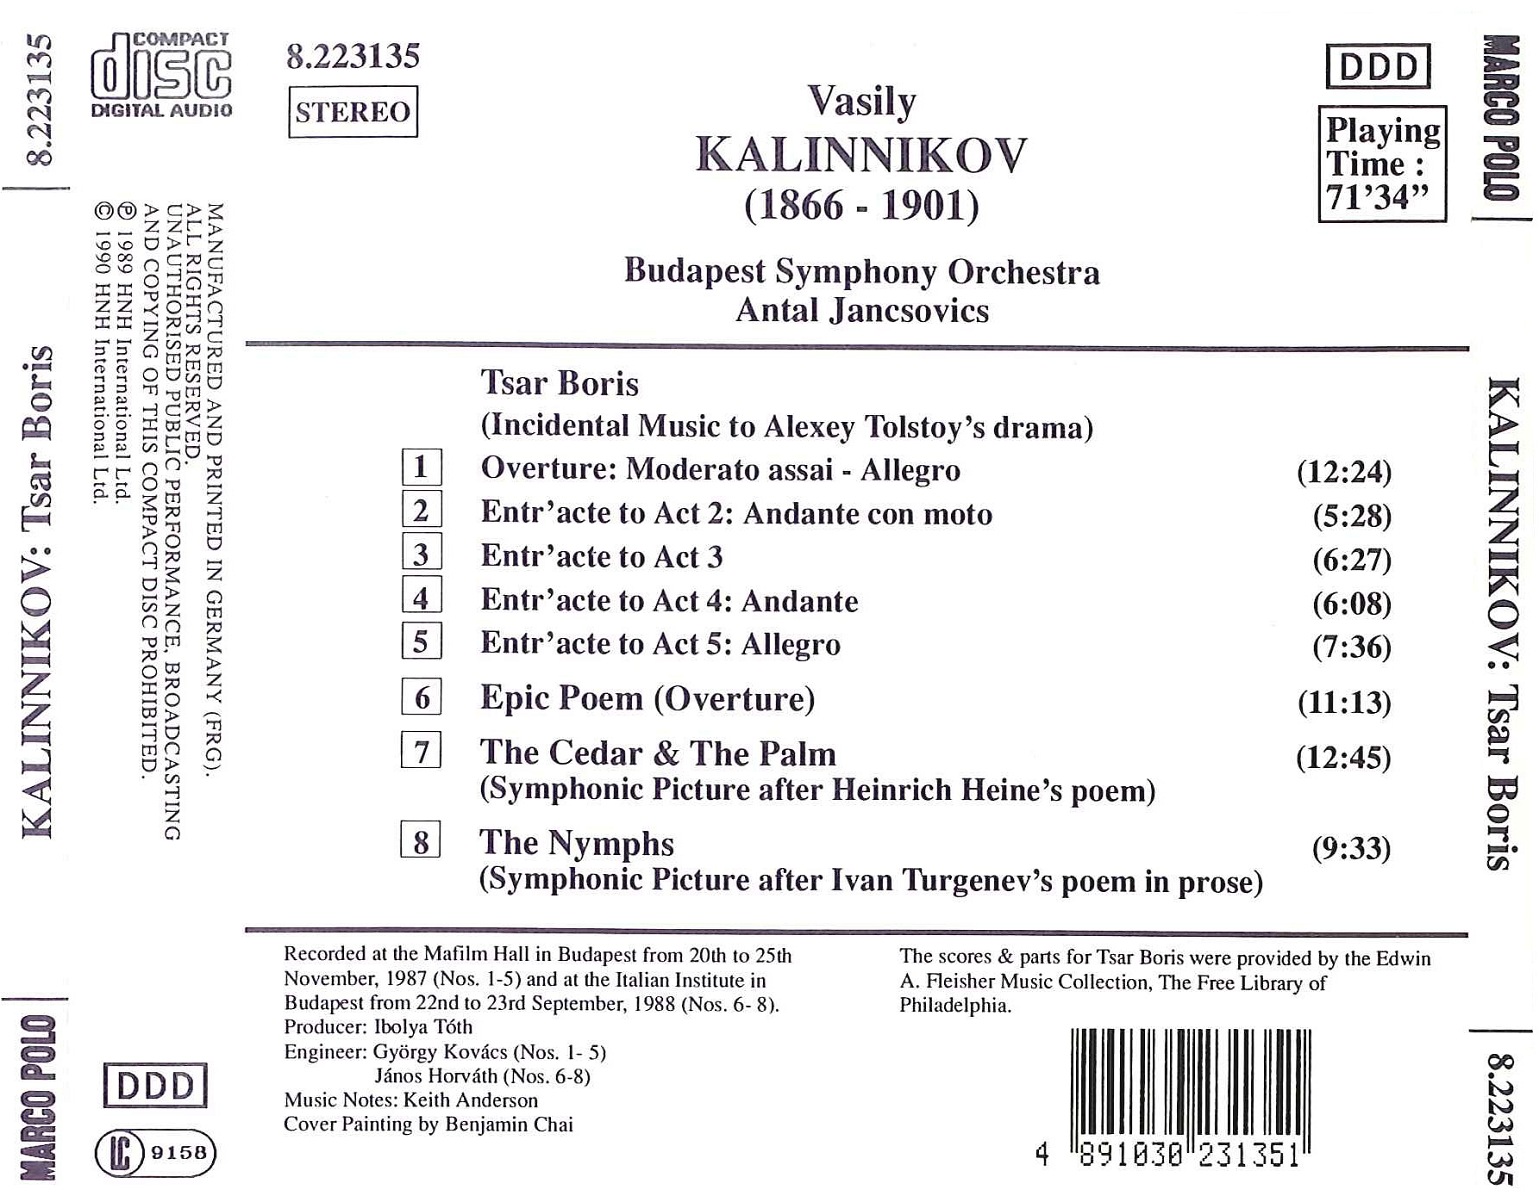 KALINNIKOV: Tsar Boris, Epic Poem, The Nymphs - slide-1